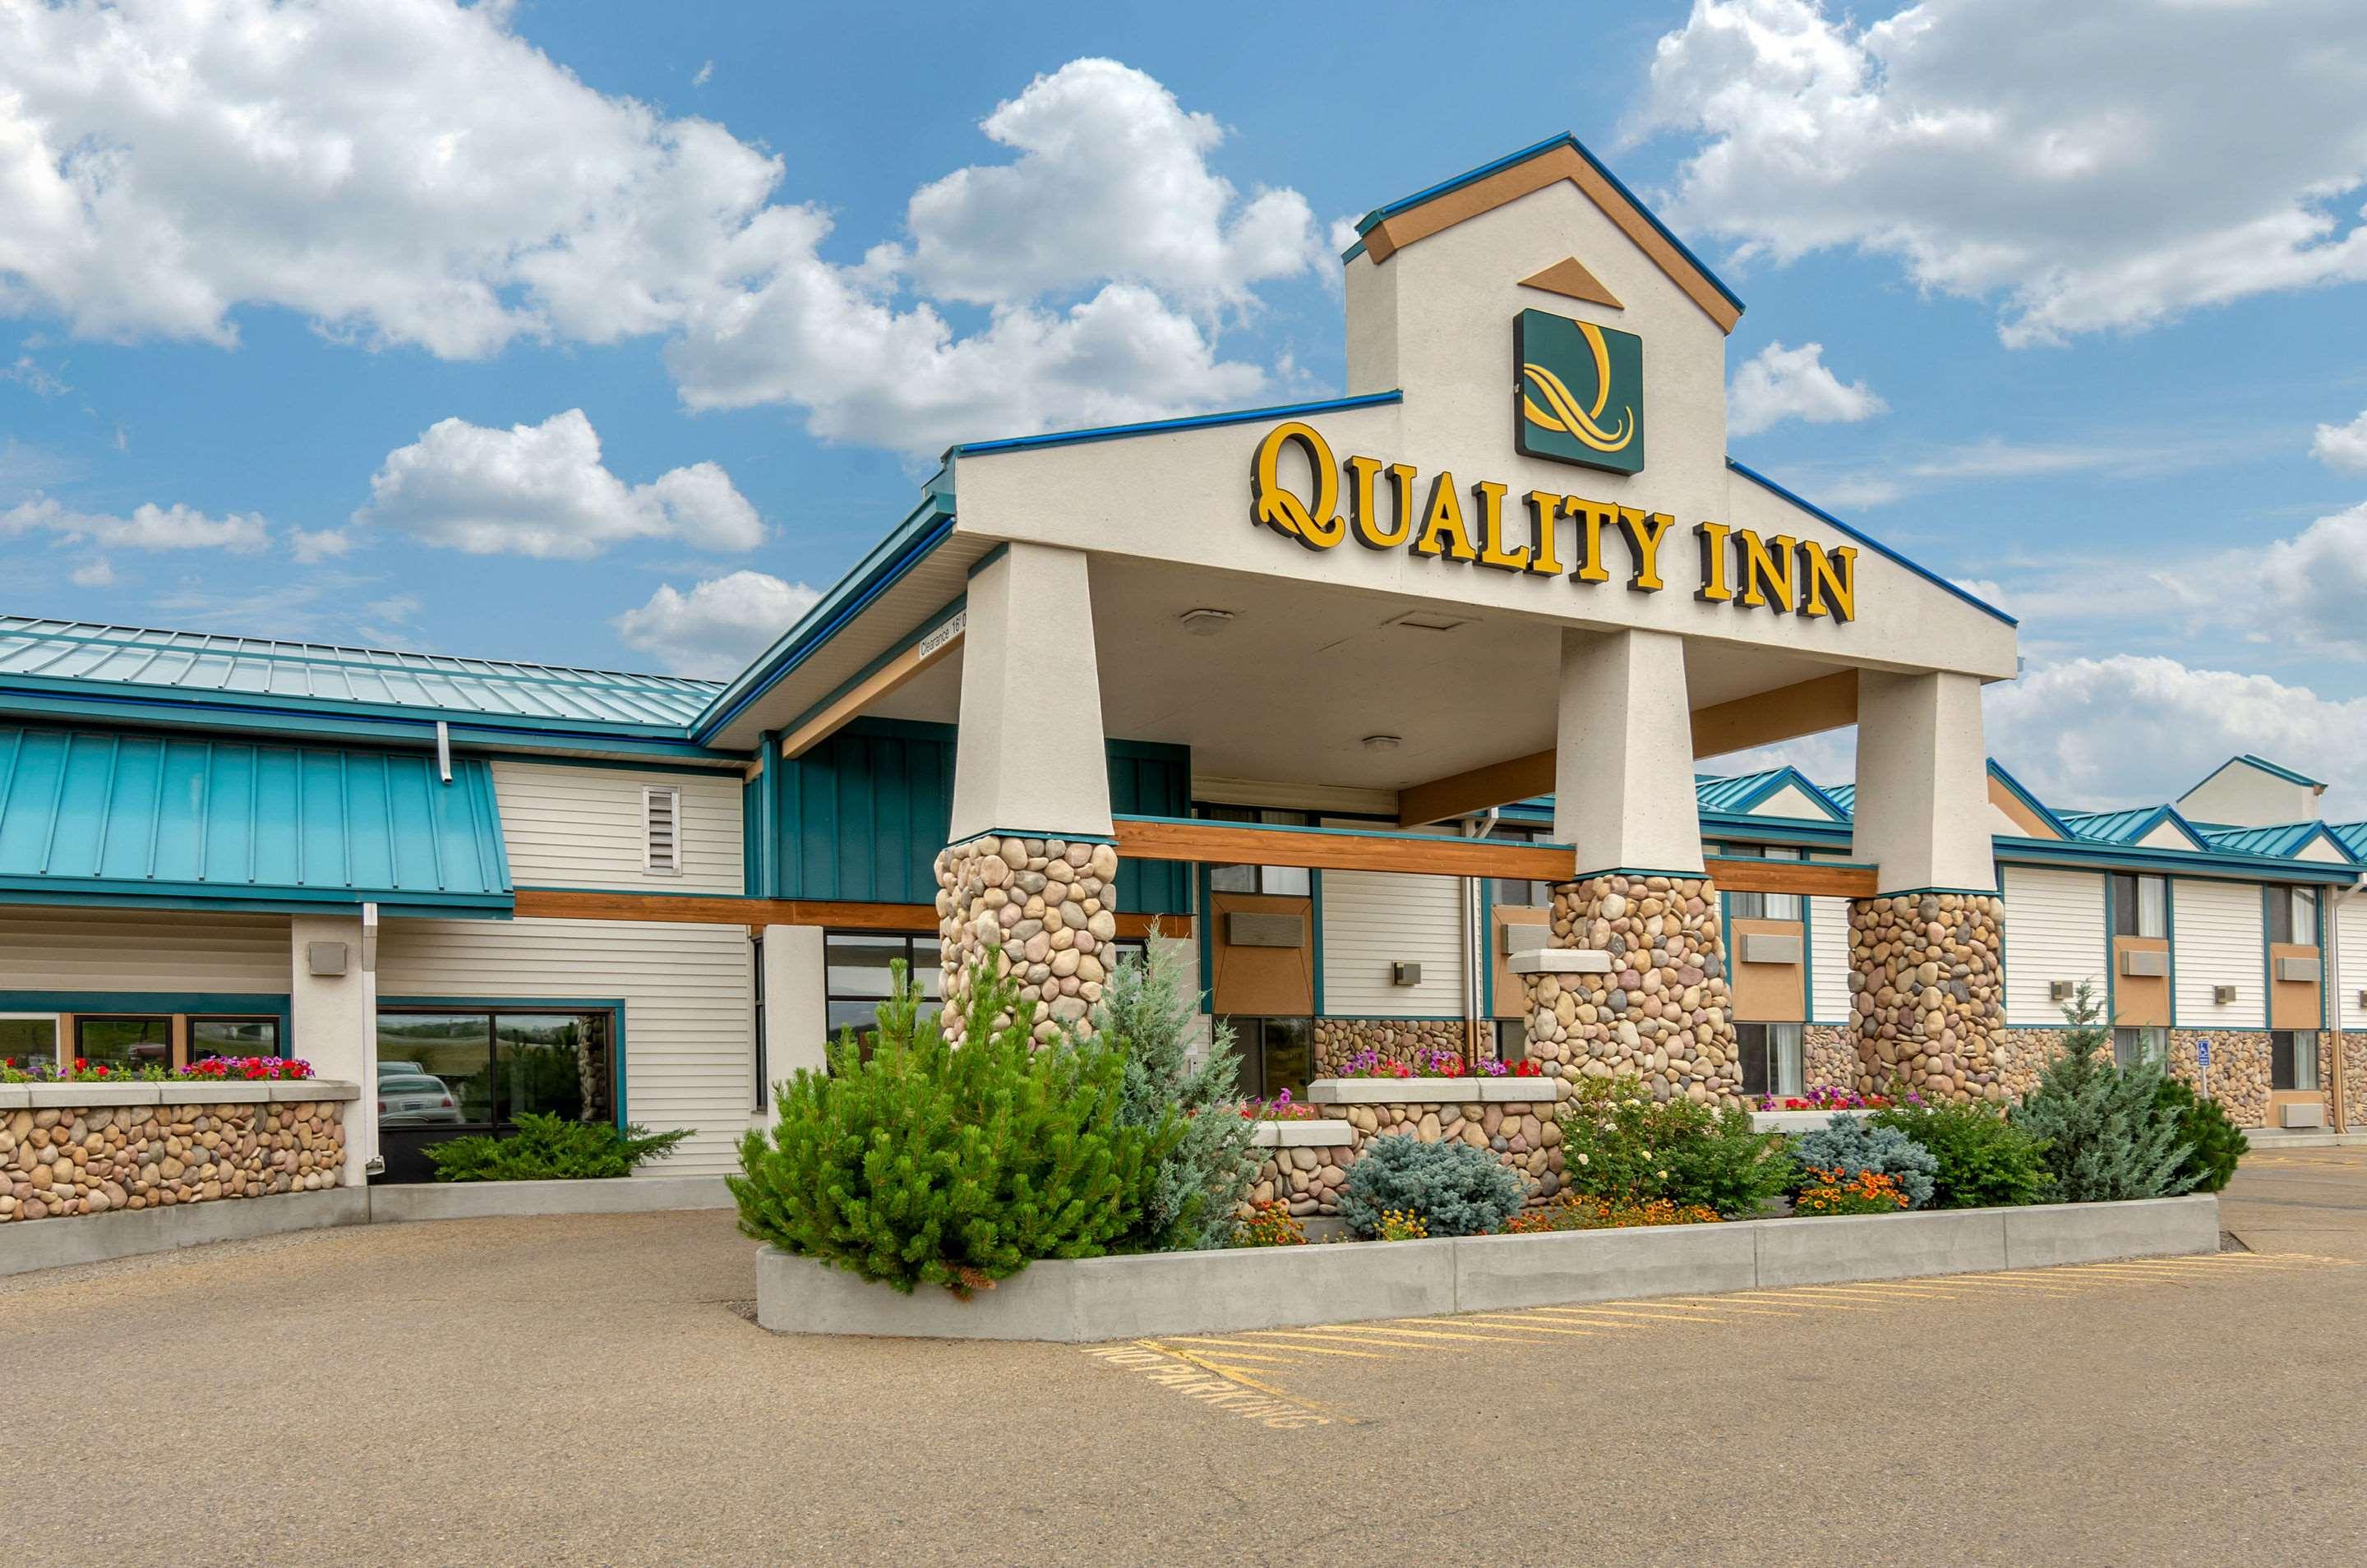 Quality Inn hotel in Dillon, MT